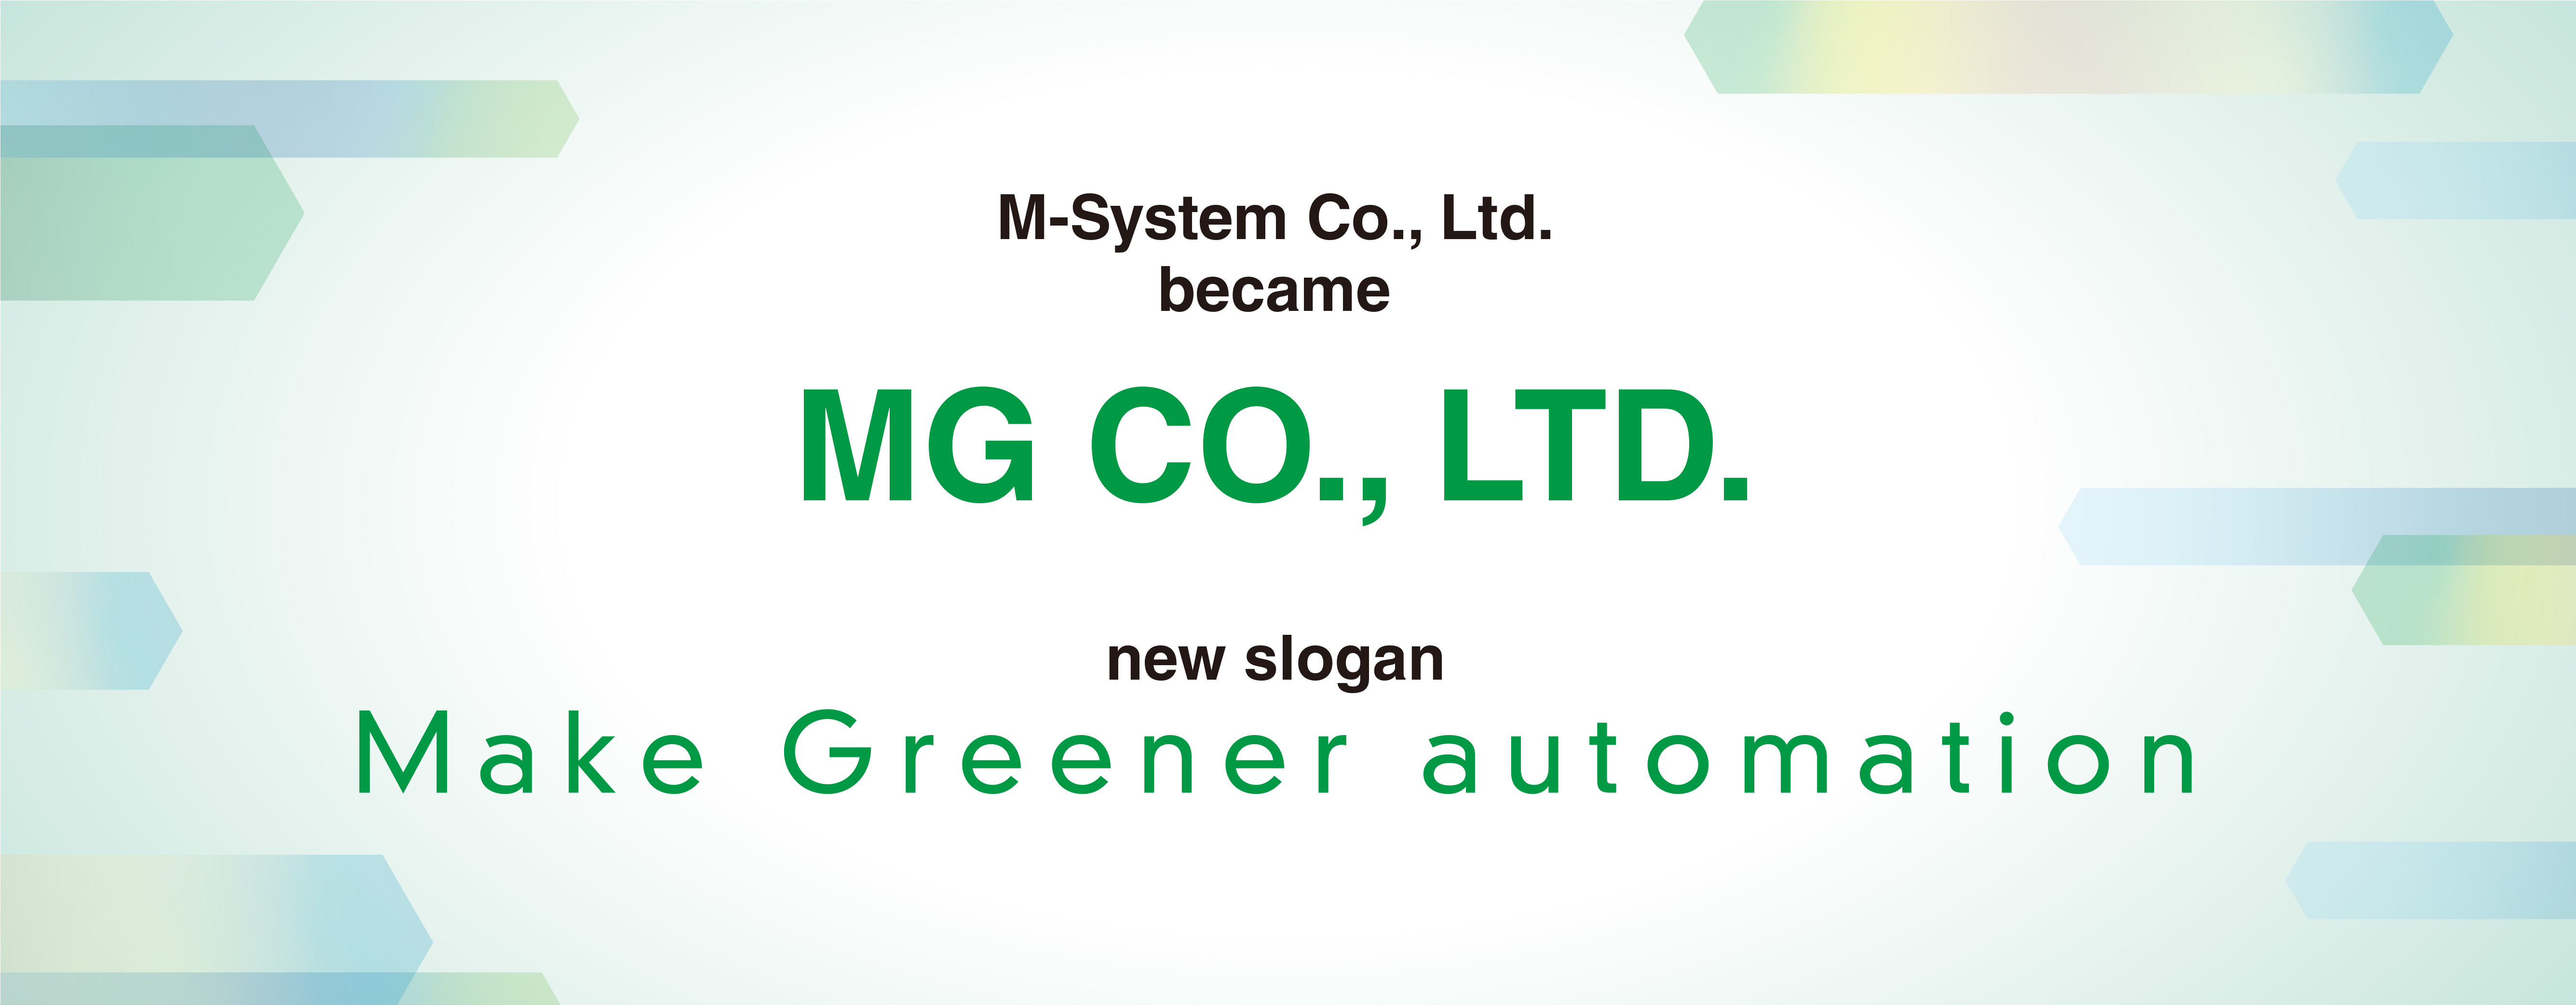 M-System Co., Ltd. become MG Co., Ltd.